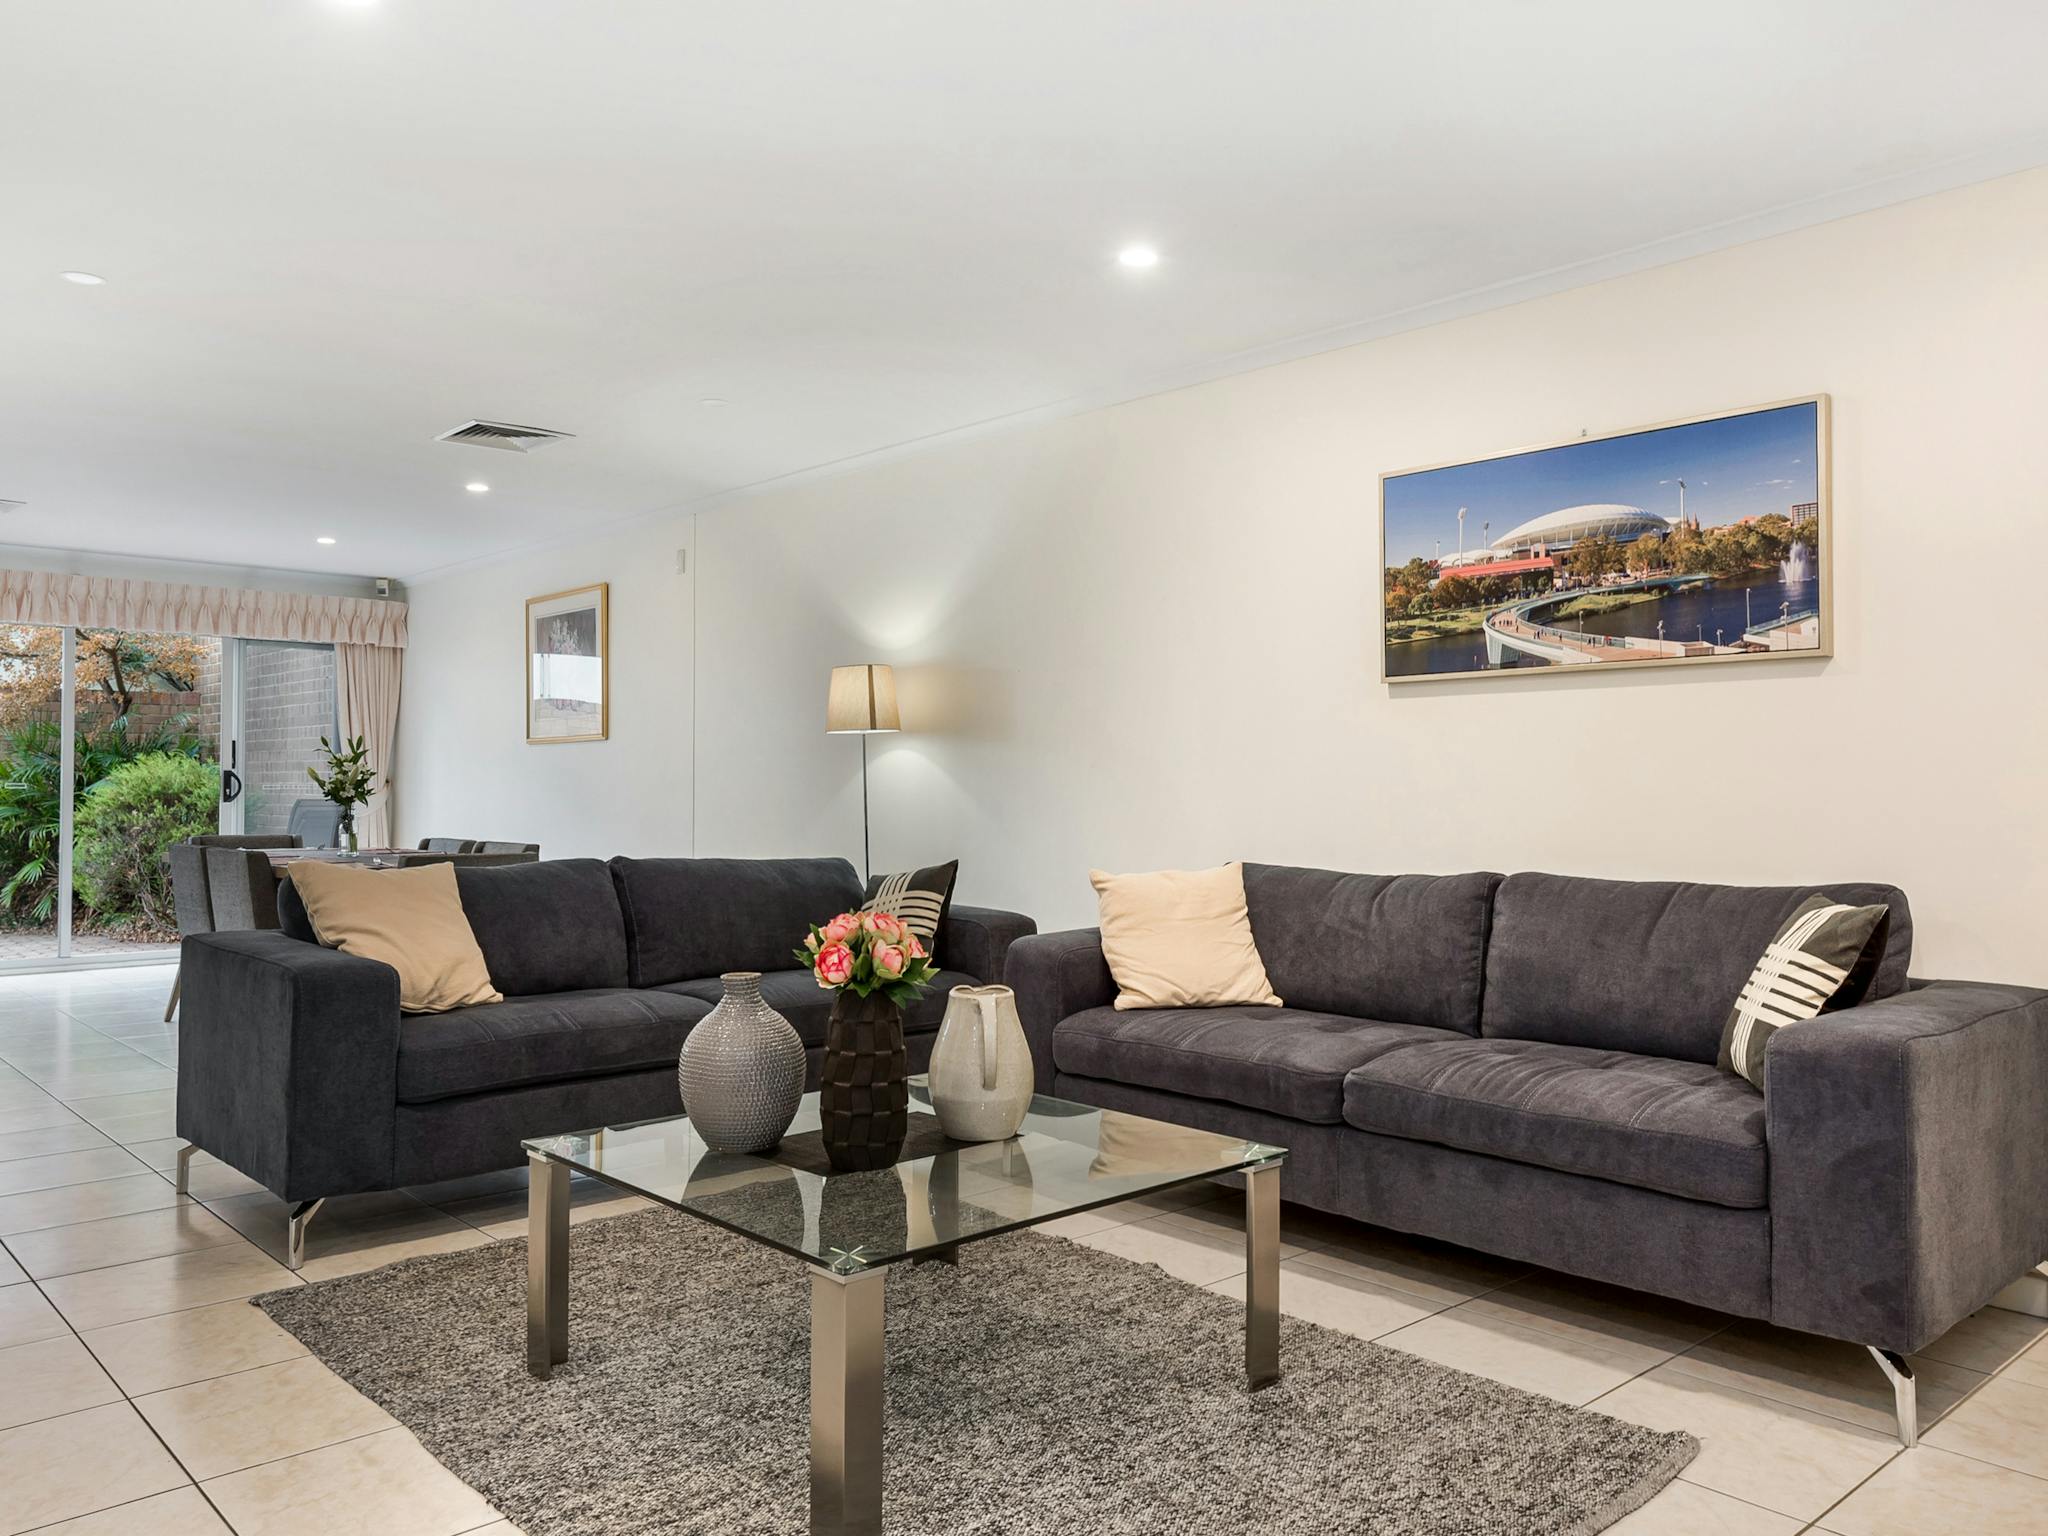 Adelaide Style Accommodation - Close to City in Stylish North Adelaide Slider Image 2